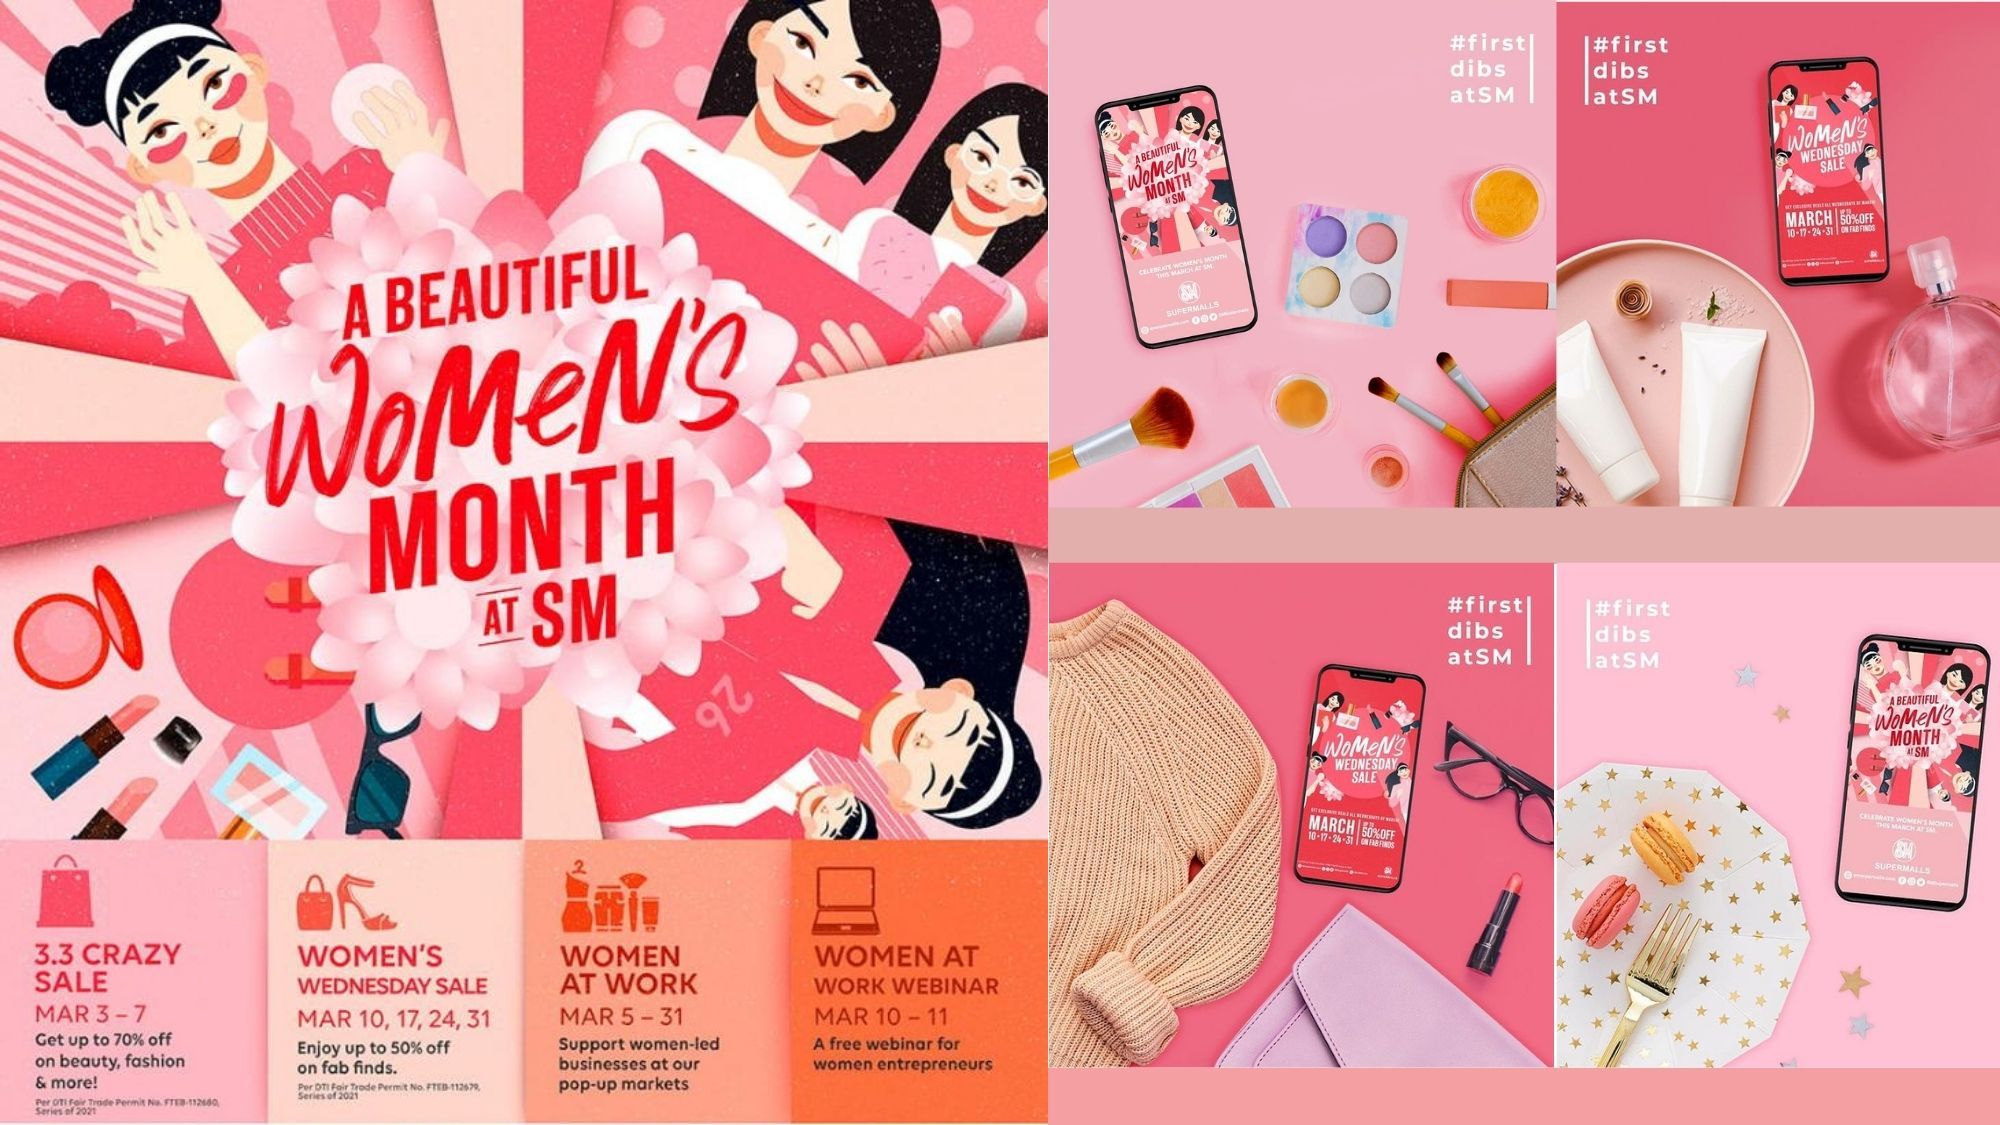  SM Celebrates Women’s Month